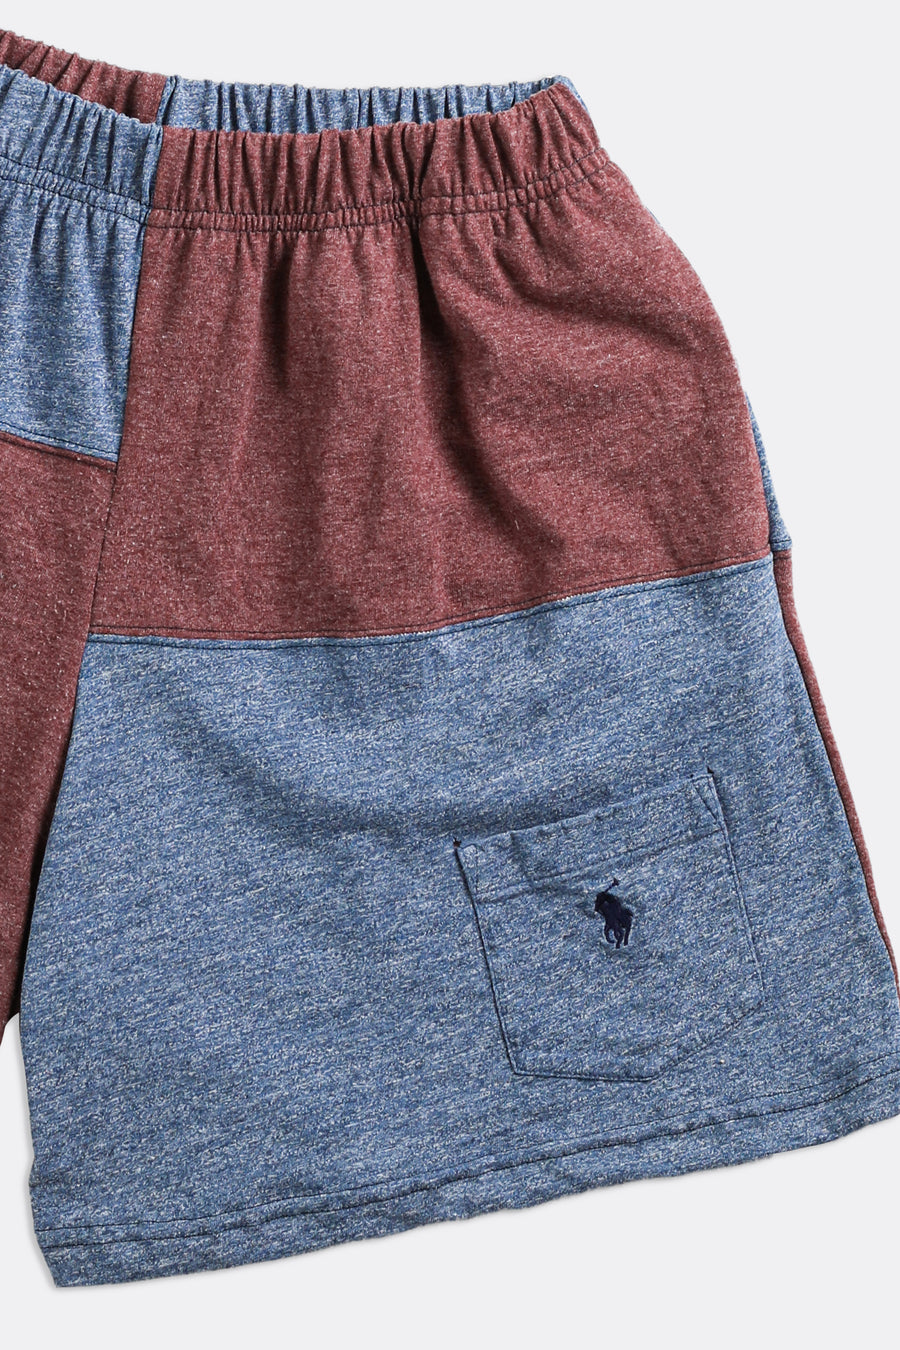 Unisex Rework Patchwork Tee Shorts - Women's M, Men's S